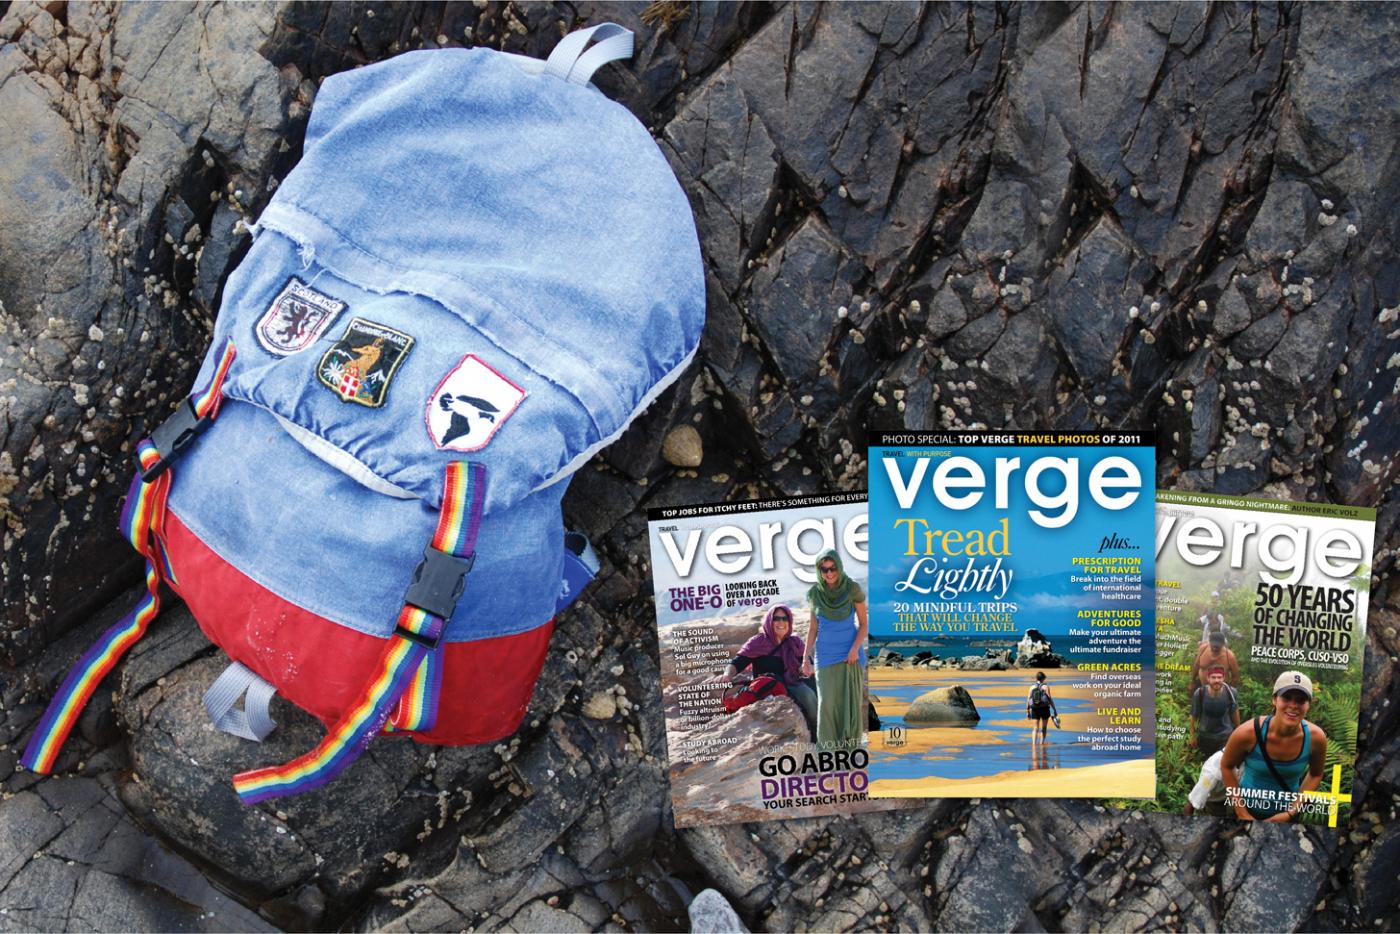 Sign up for the Verge Magazine Travel Intelligence e-Bulletin